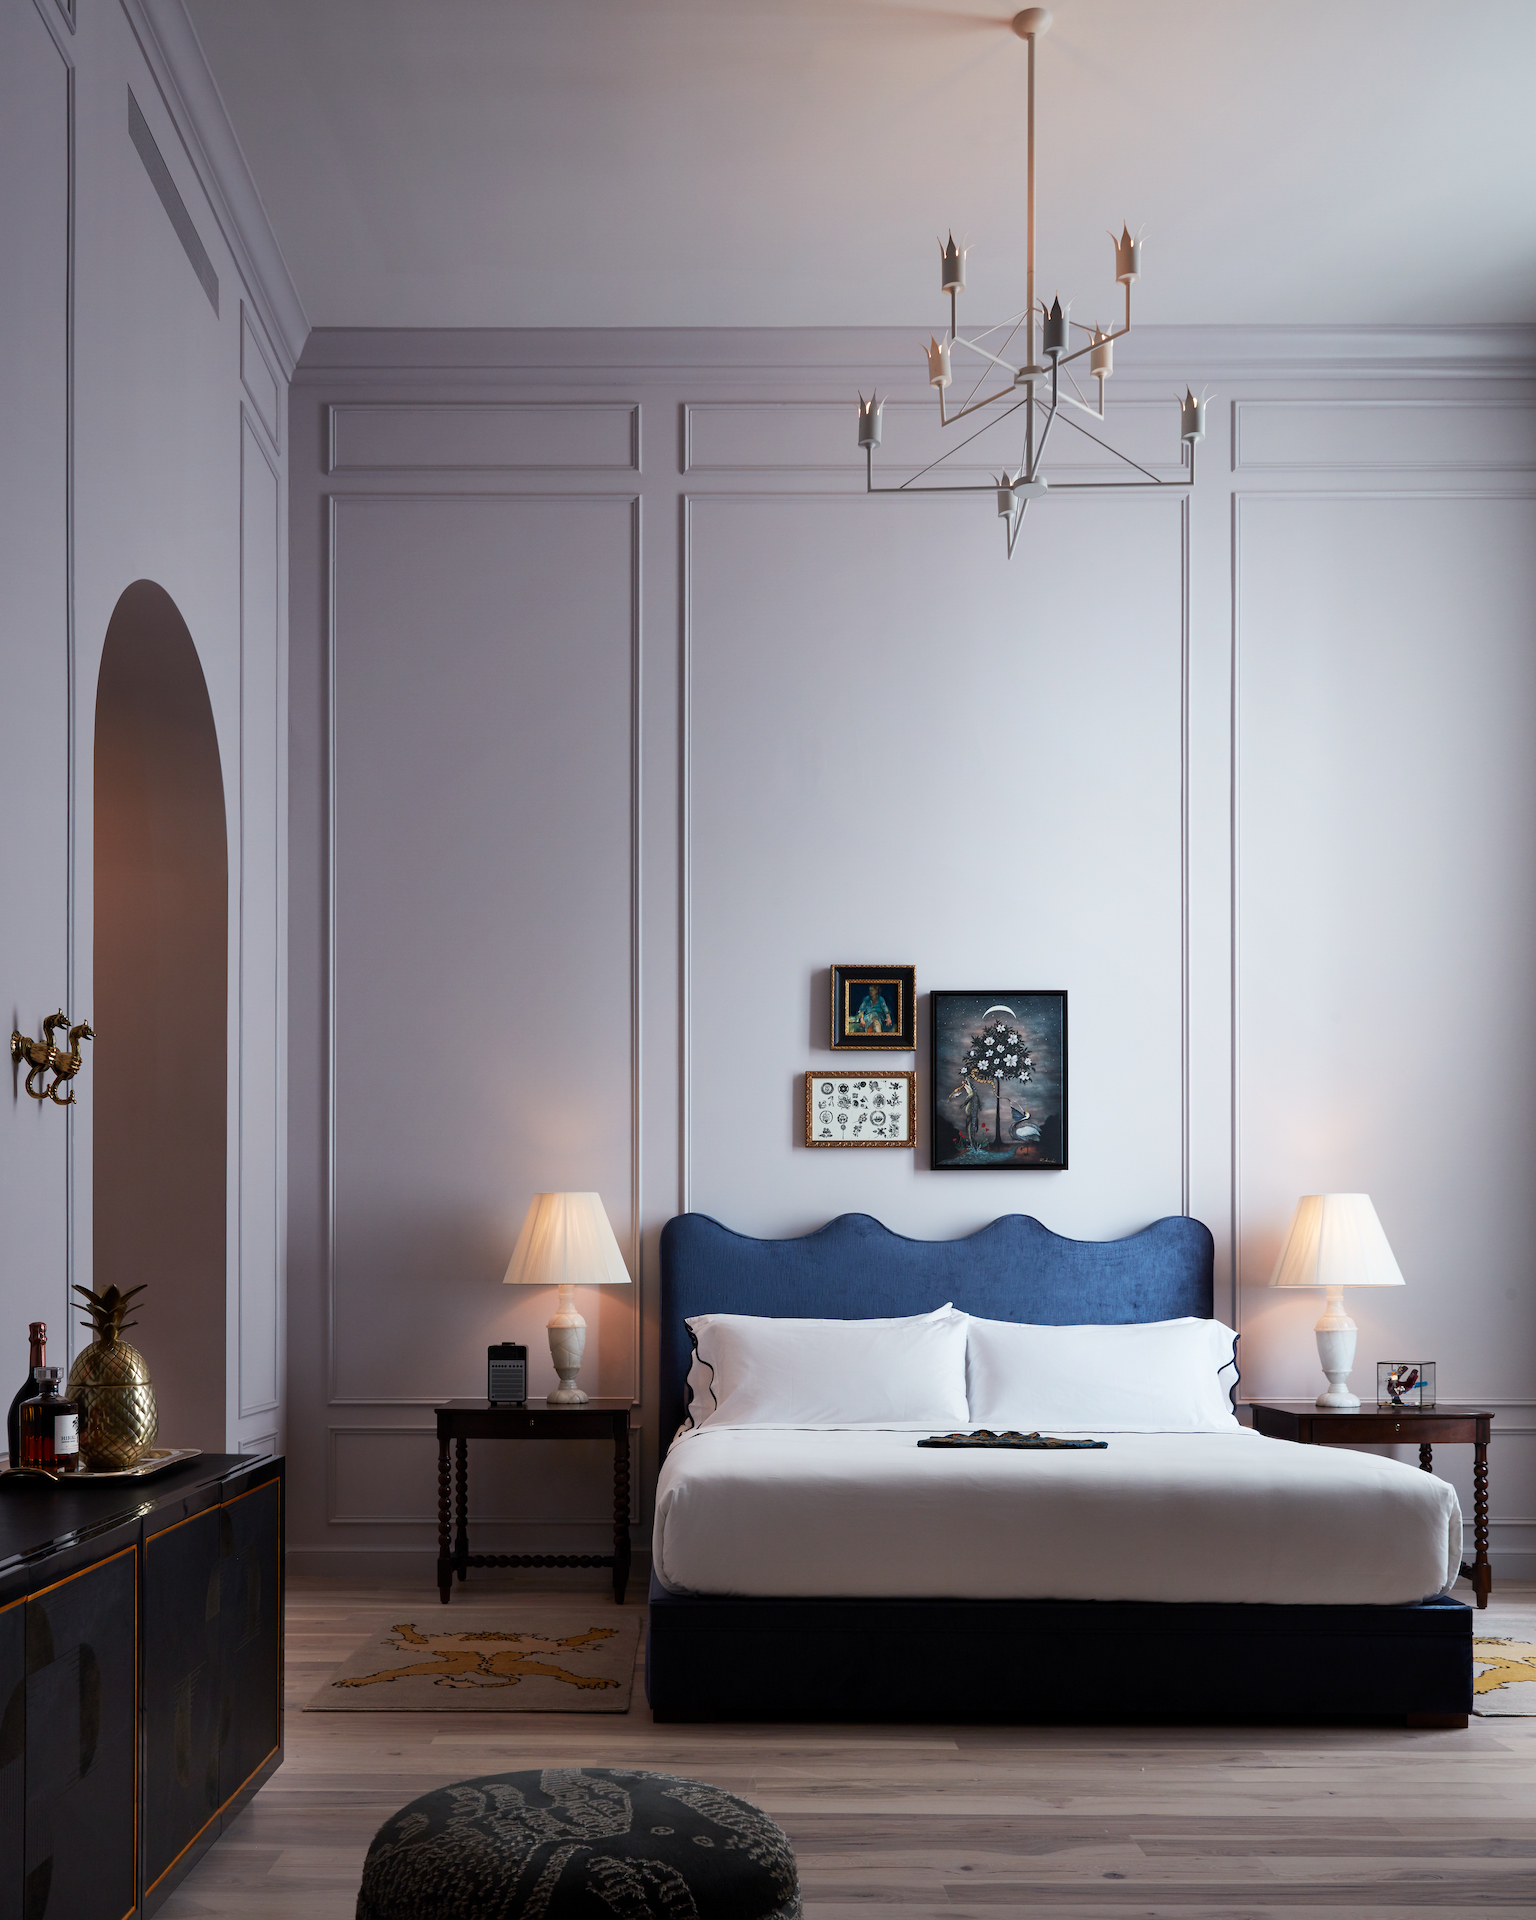 Maison de la Luz guest bedroom with blue curved headboard